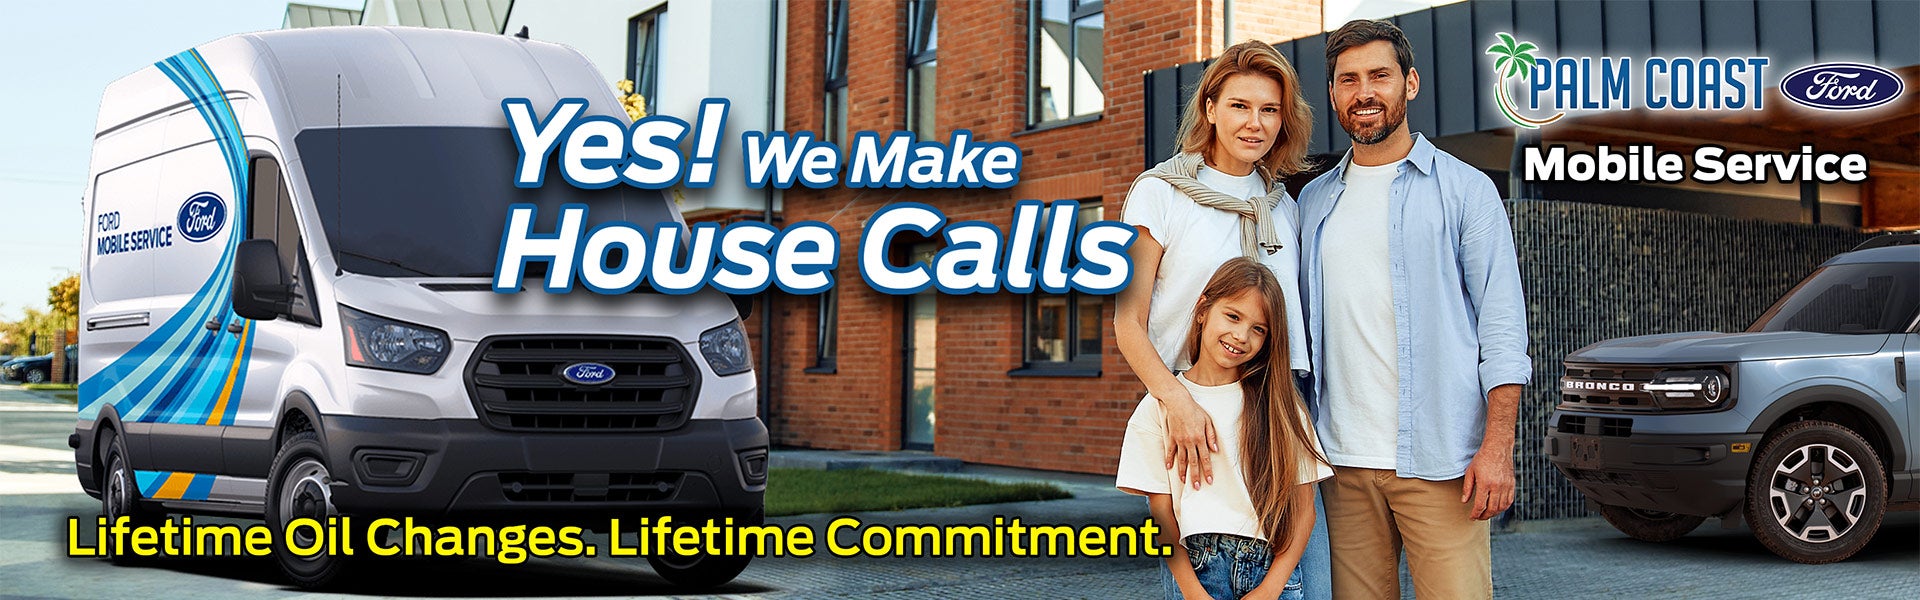 We Make House Calls